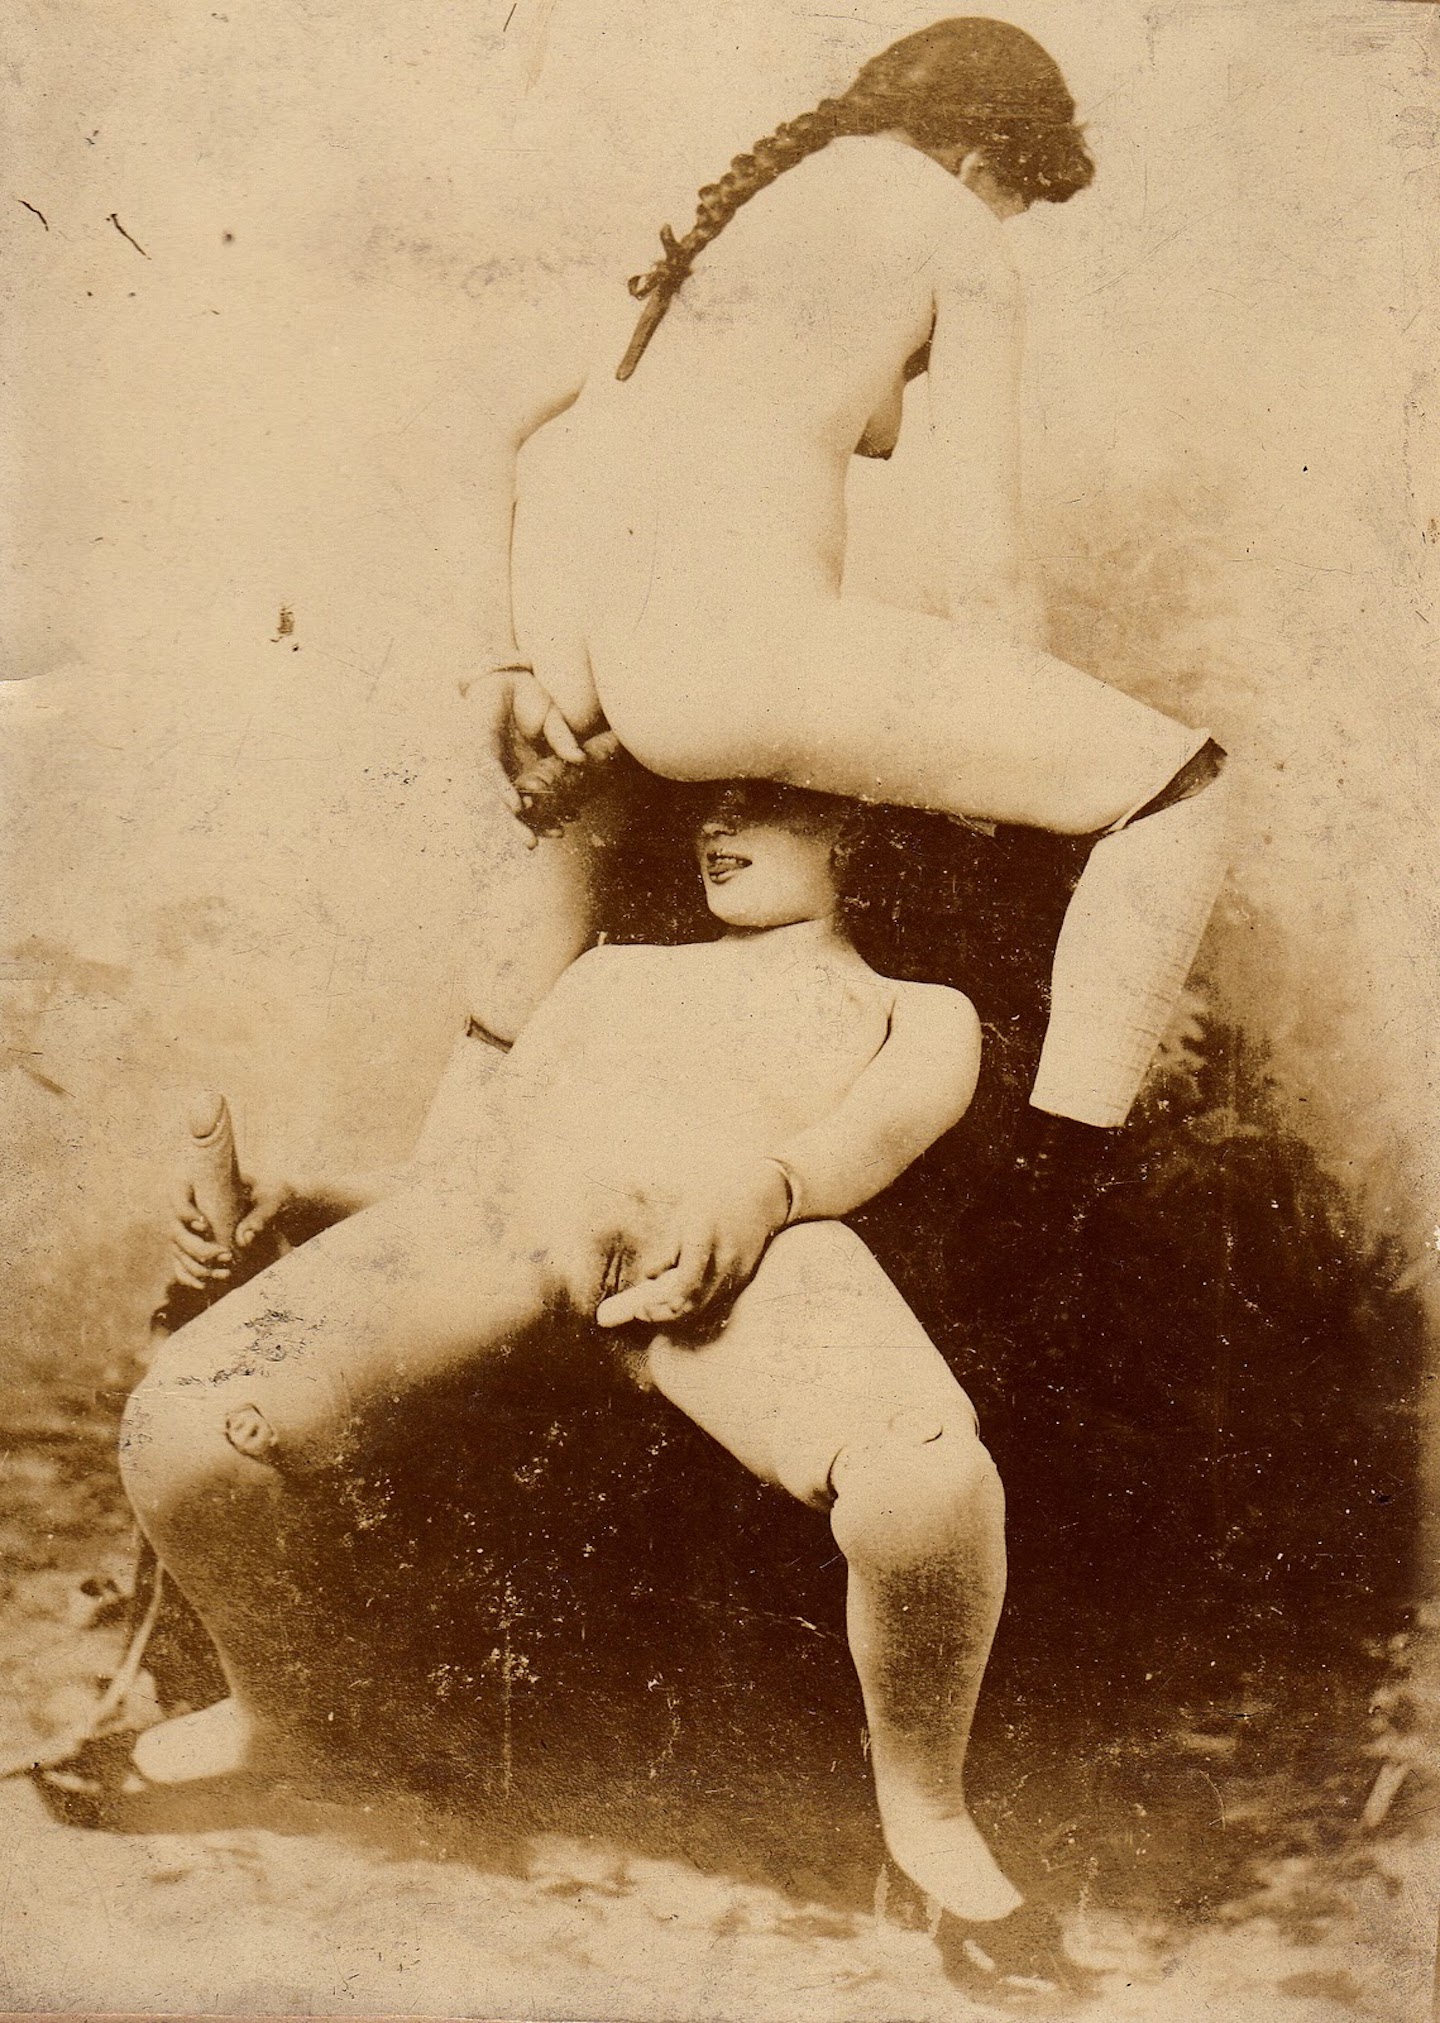 1800s Porno - The Unbridled Joy of Victorian Porn